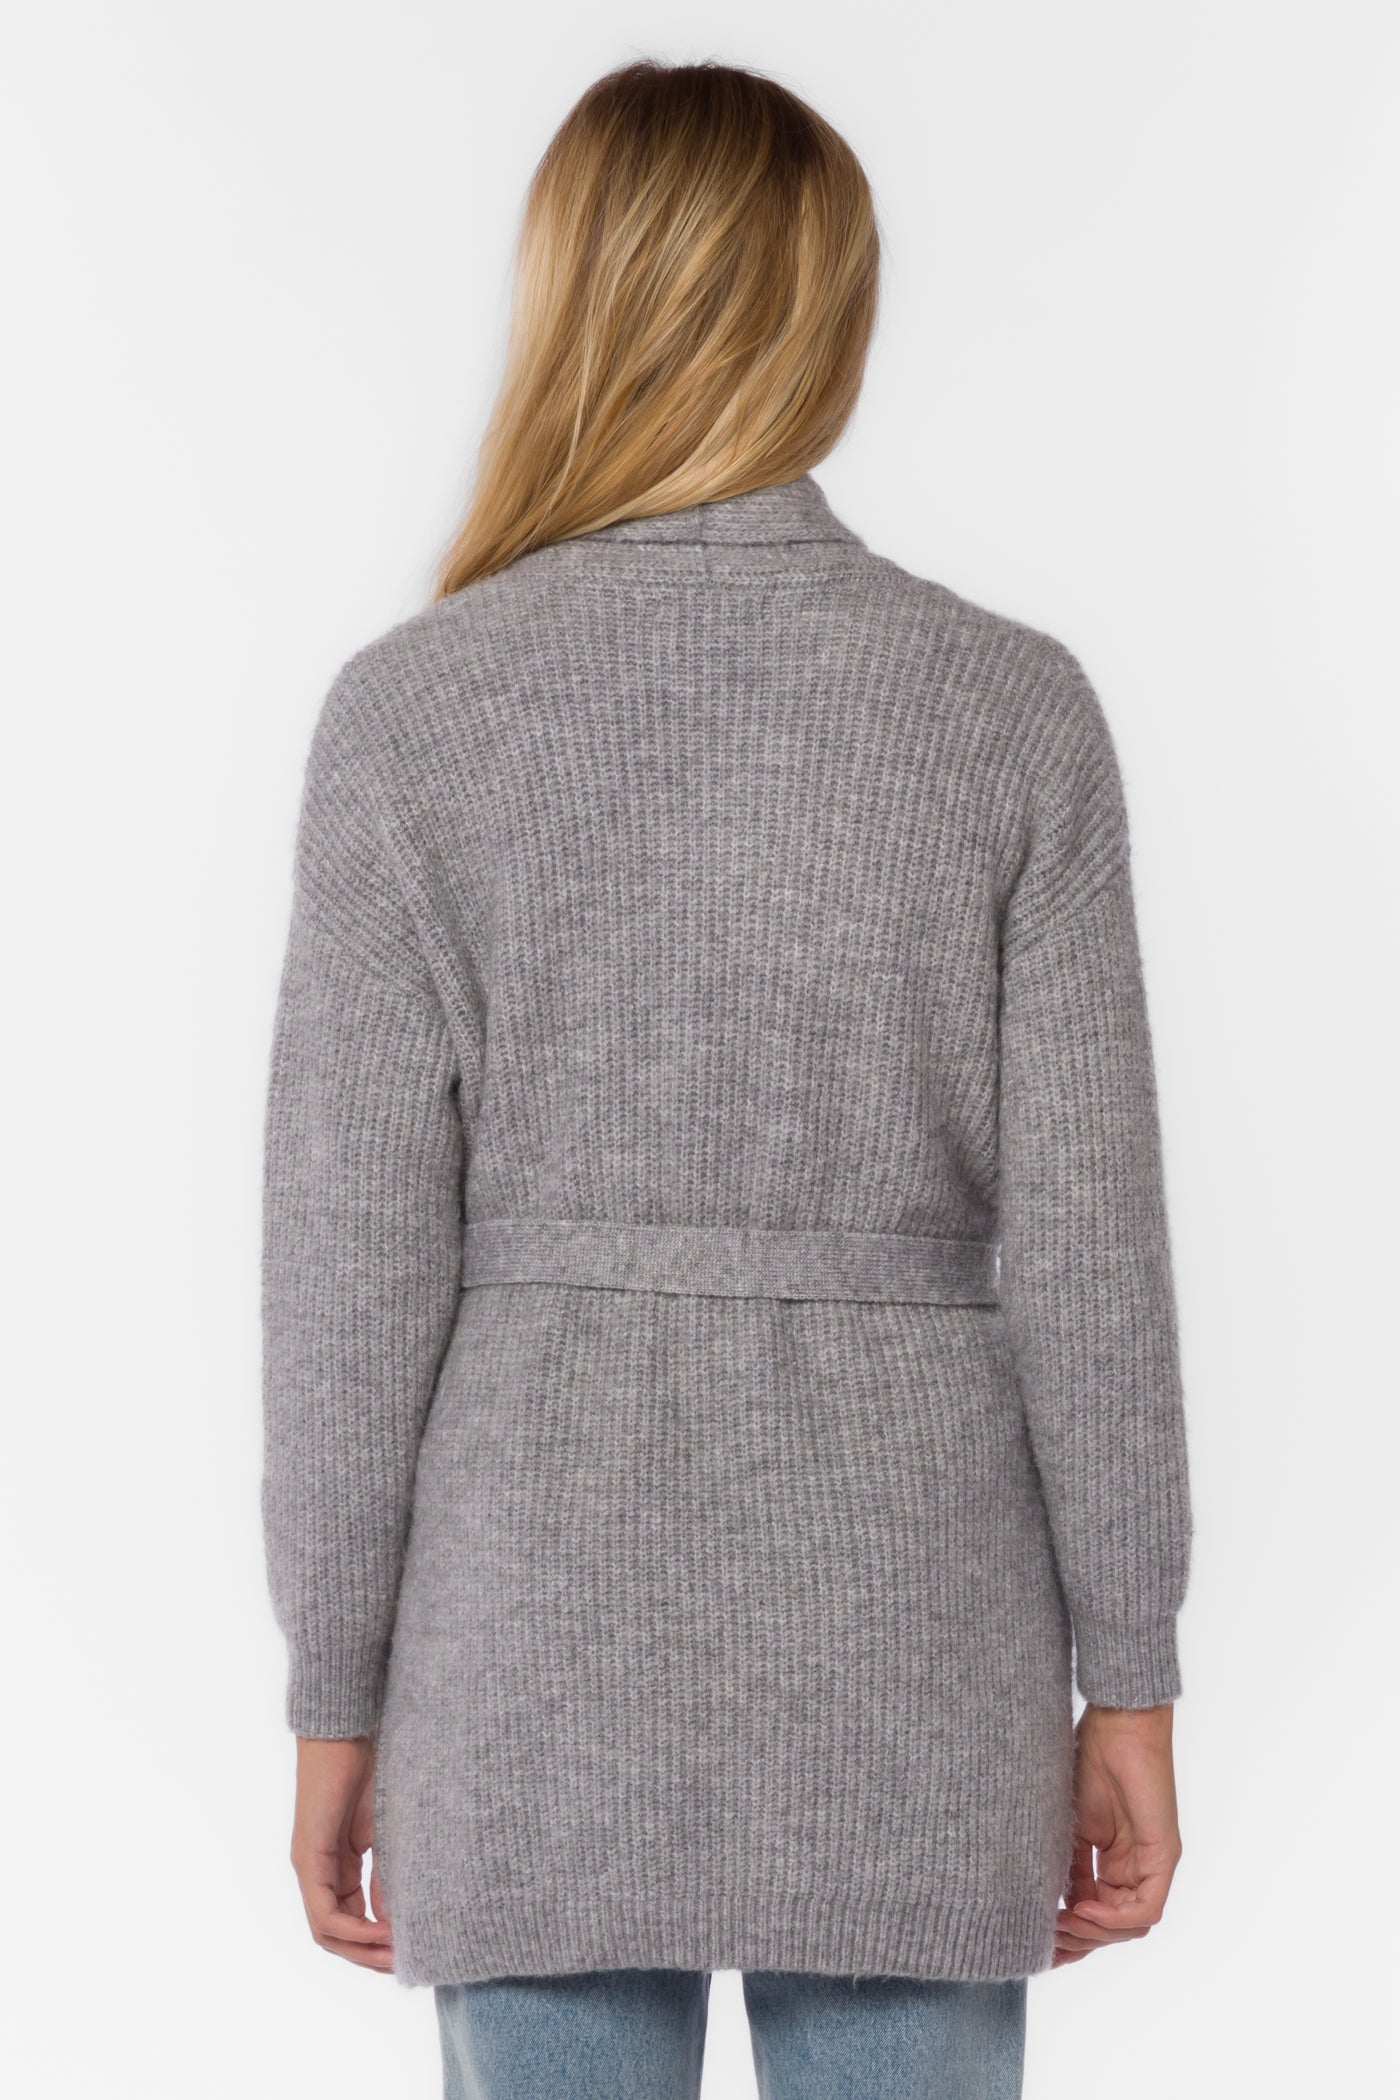 Landon Grey Sweater - Sweaters - Velvet Heart Clothing